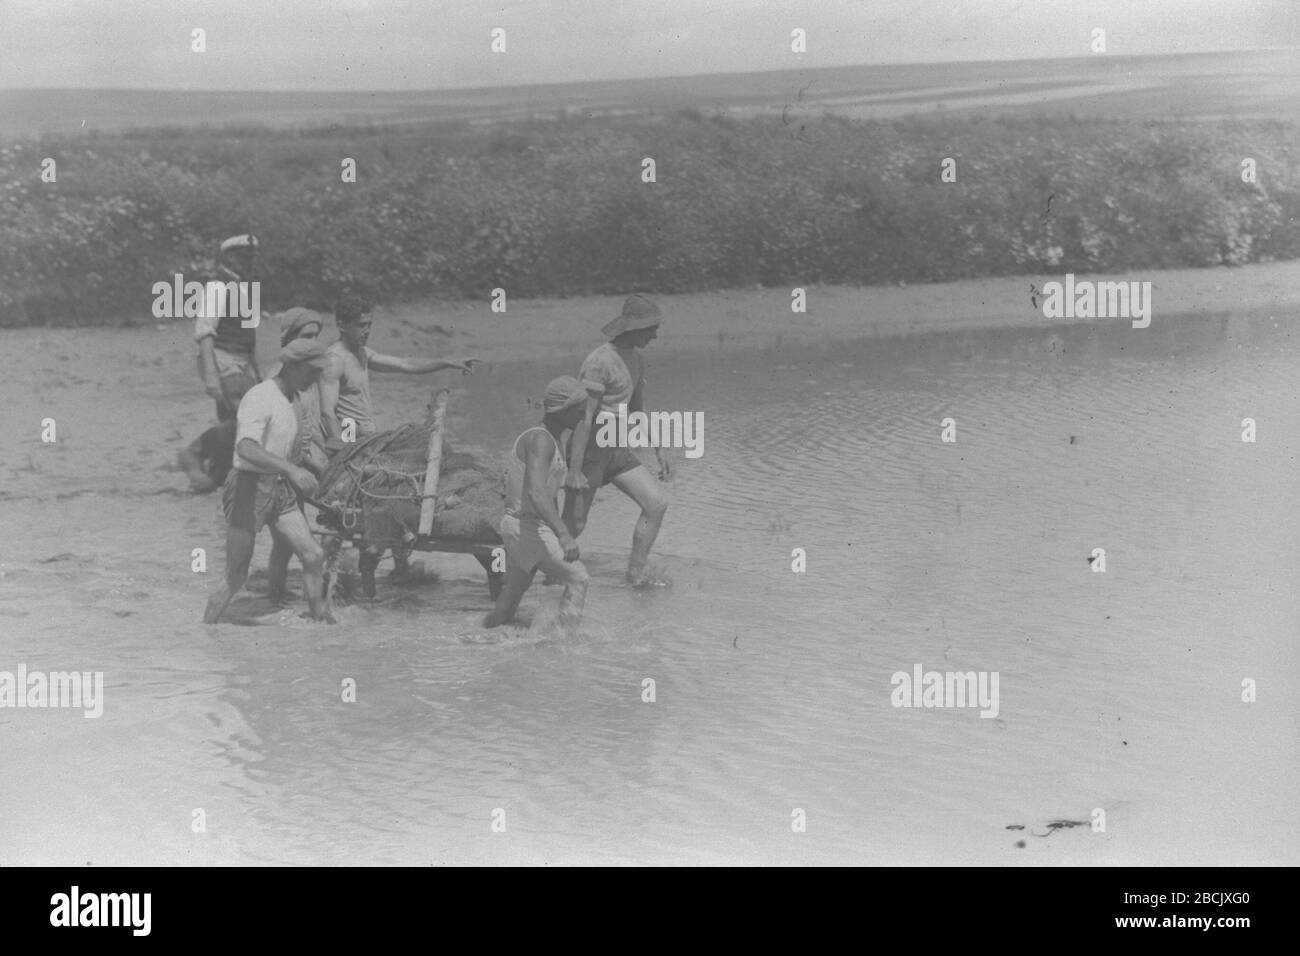 English Members Of Kibbutz Sde Nahum Carrying A Fishing Net Into The Fish Pond O E O Ss O E I C I I O I U O I E O U U I I I E I O E I U I I I O U E O O C I E 01 06 1943 This Is